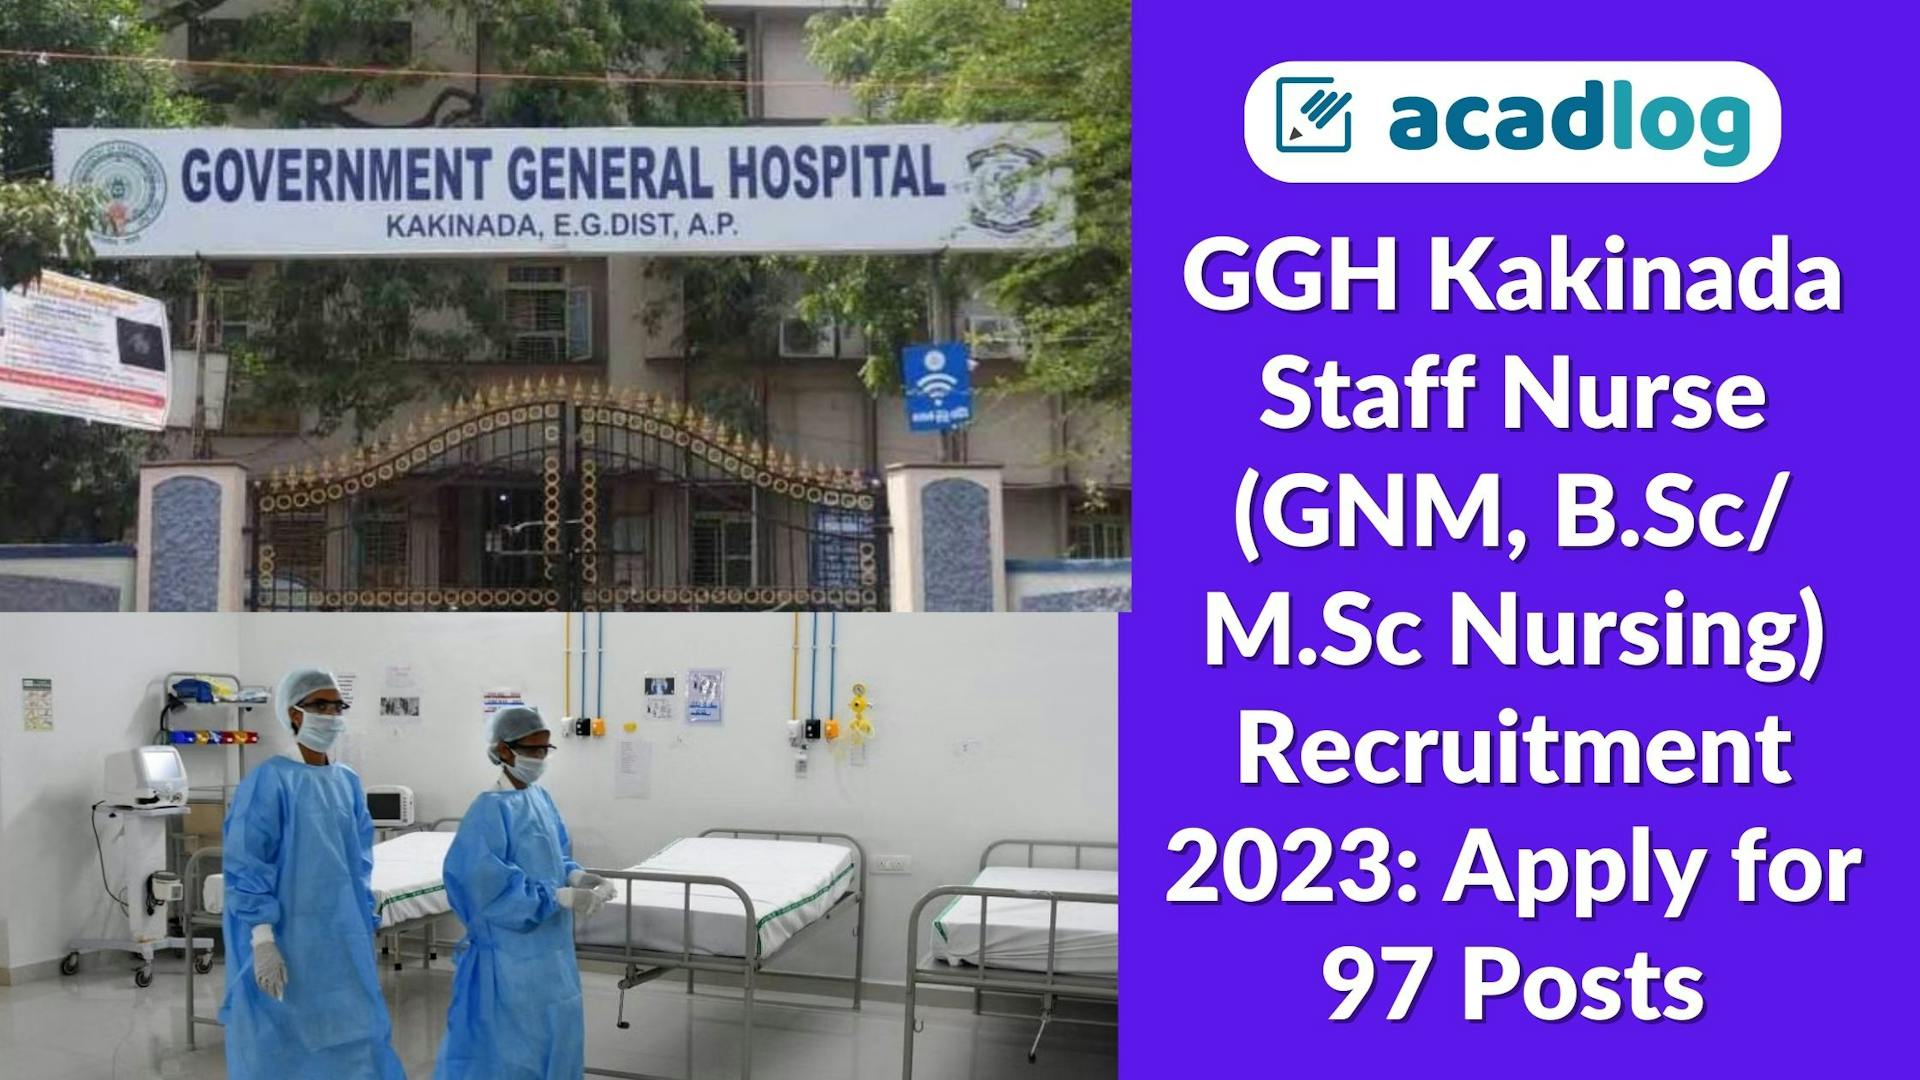 GGH Kakinada Staff Nurse Recruitment 2023: Apply for 97 Posts